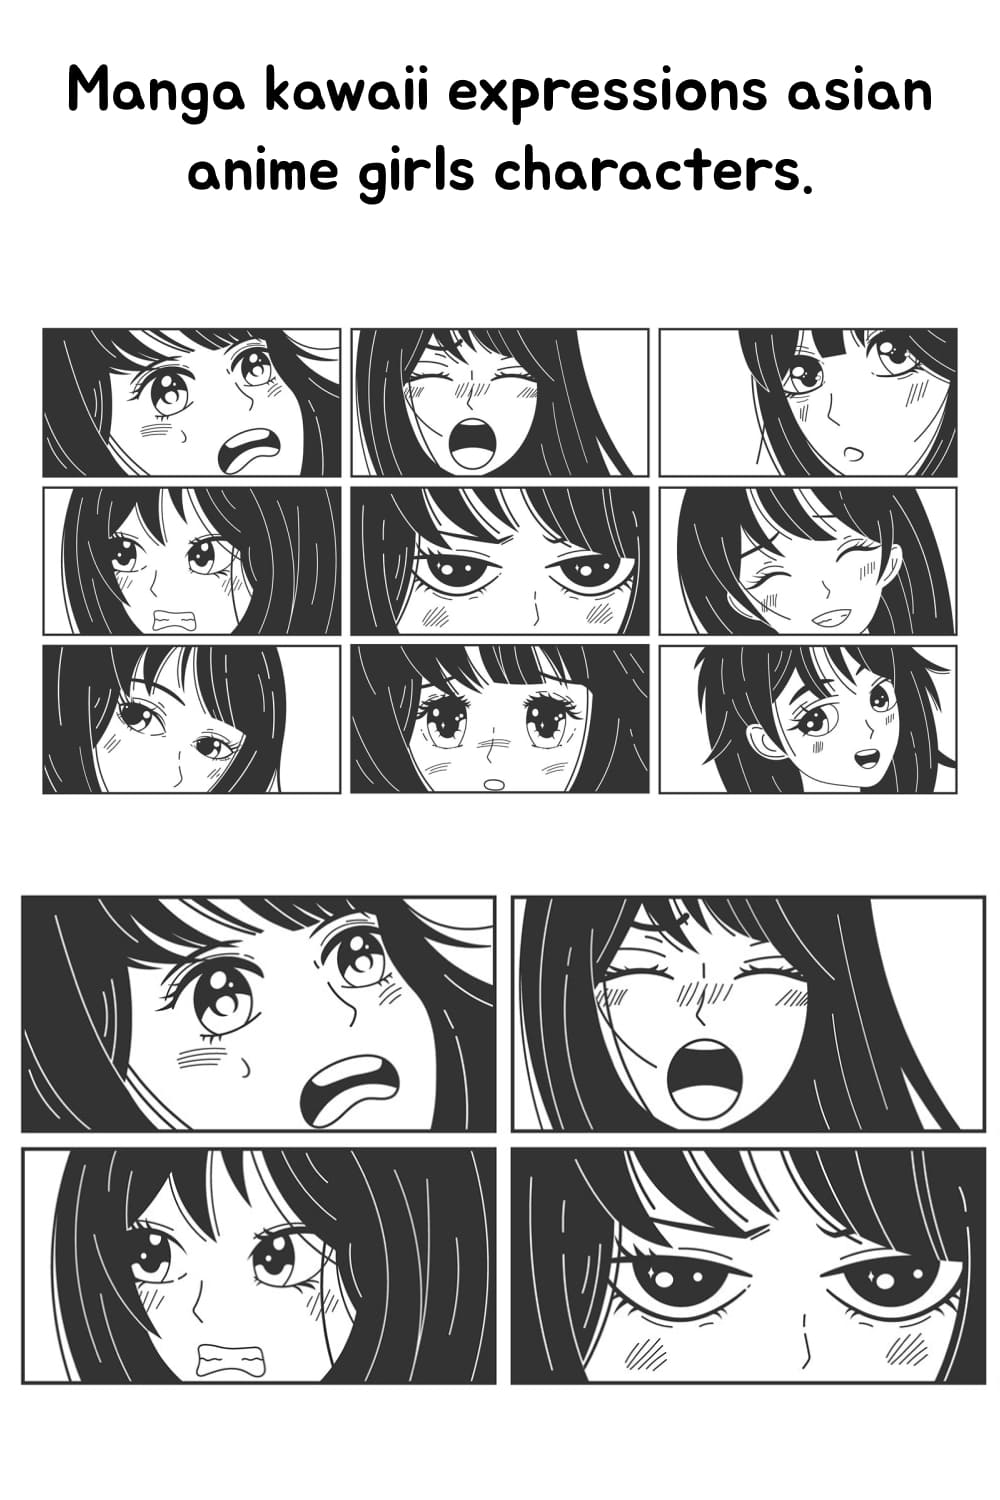 Manga Kawaii Expressions Asian Anime Girls Characters. Anime - Pinterest.